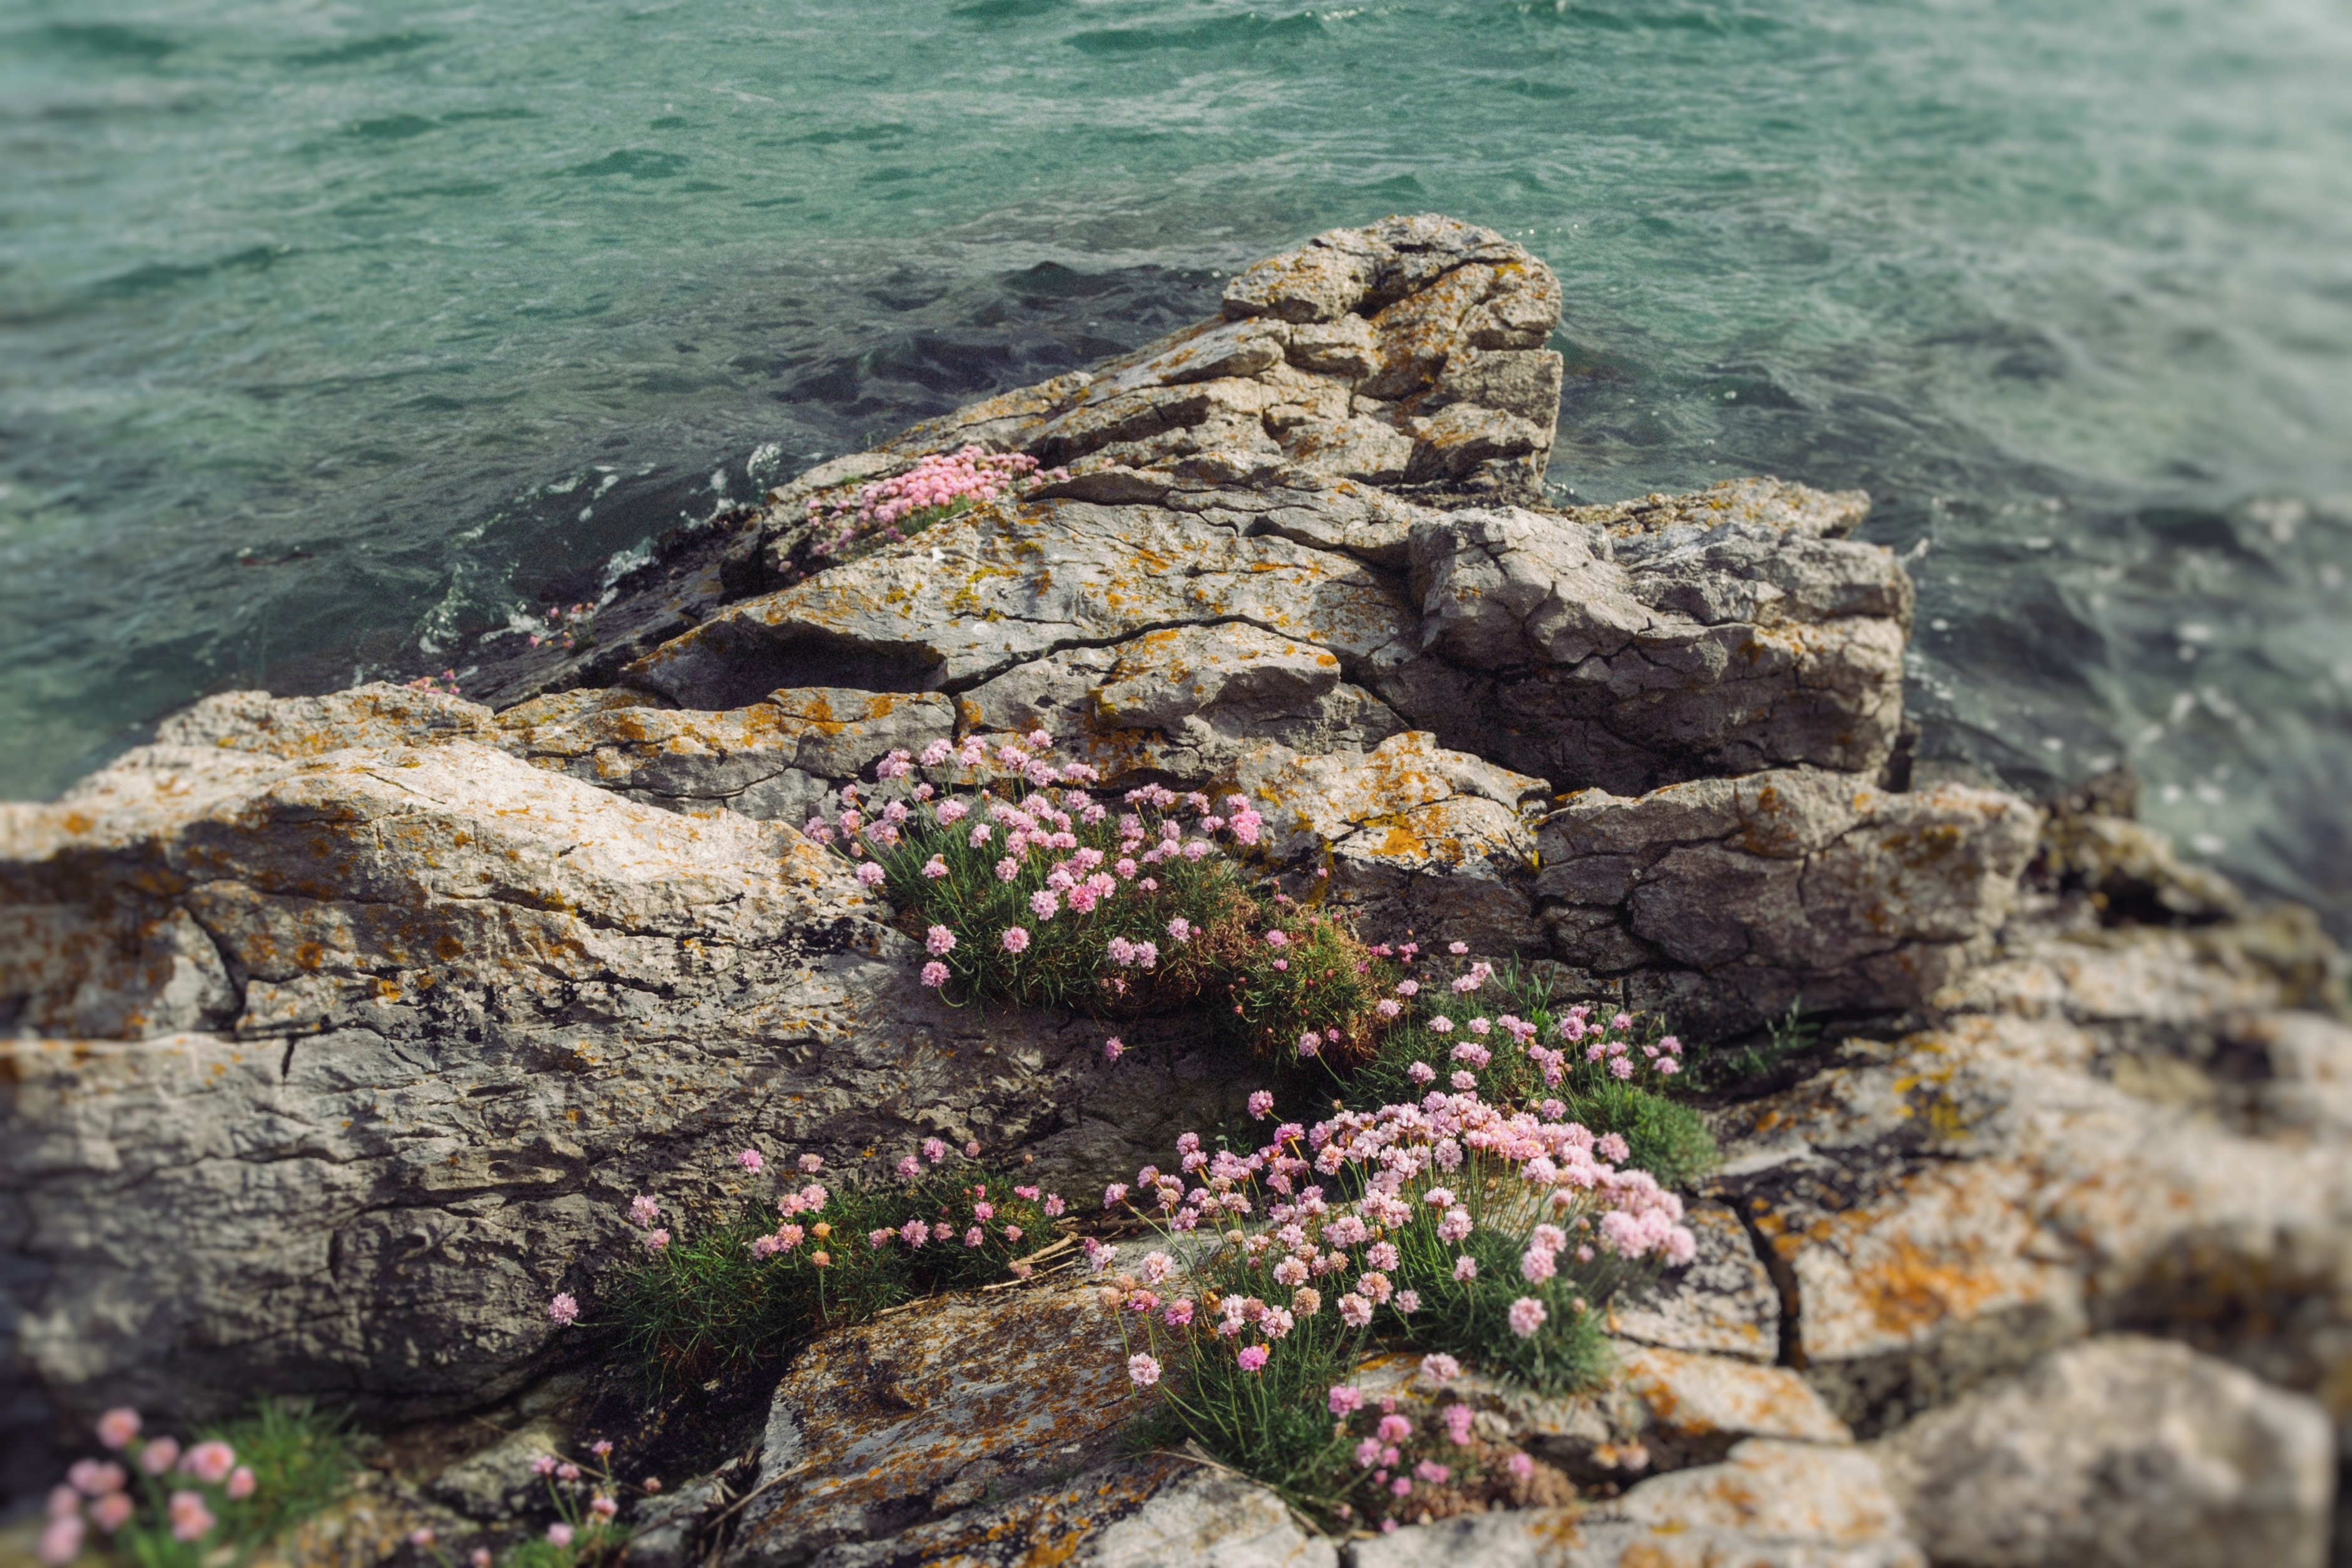 irish shoreline with rocks and flowers